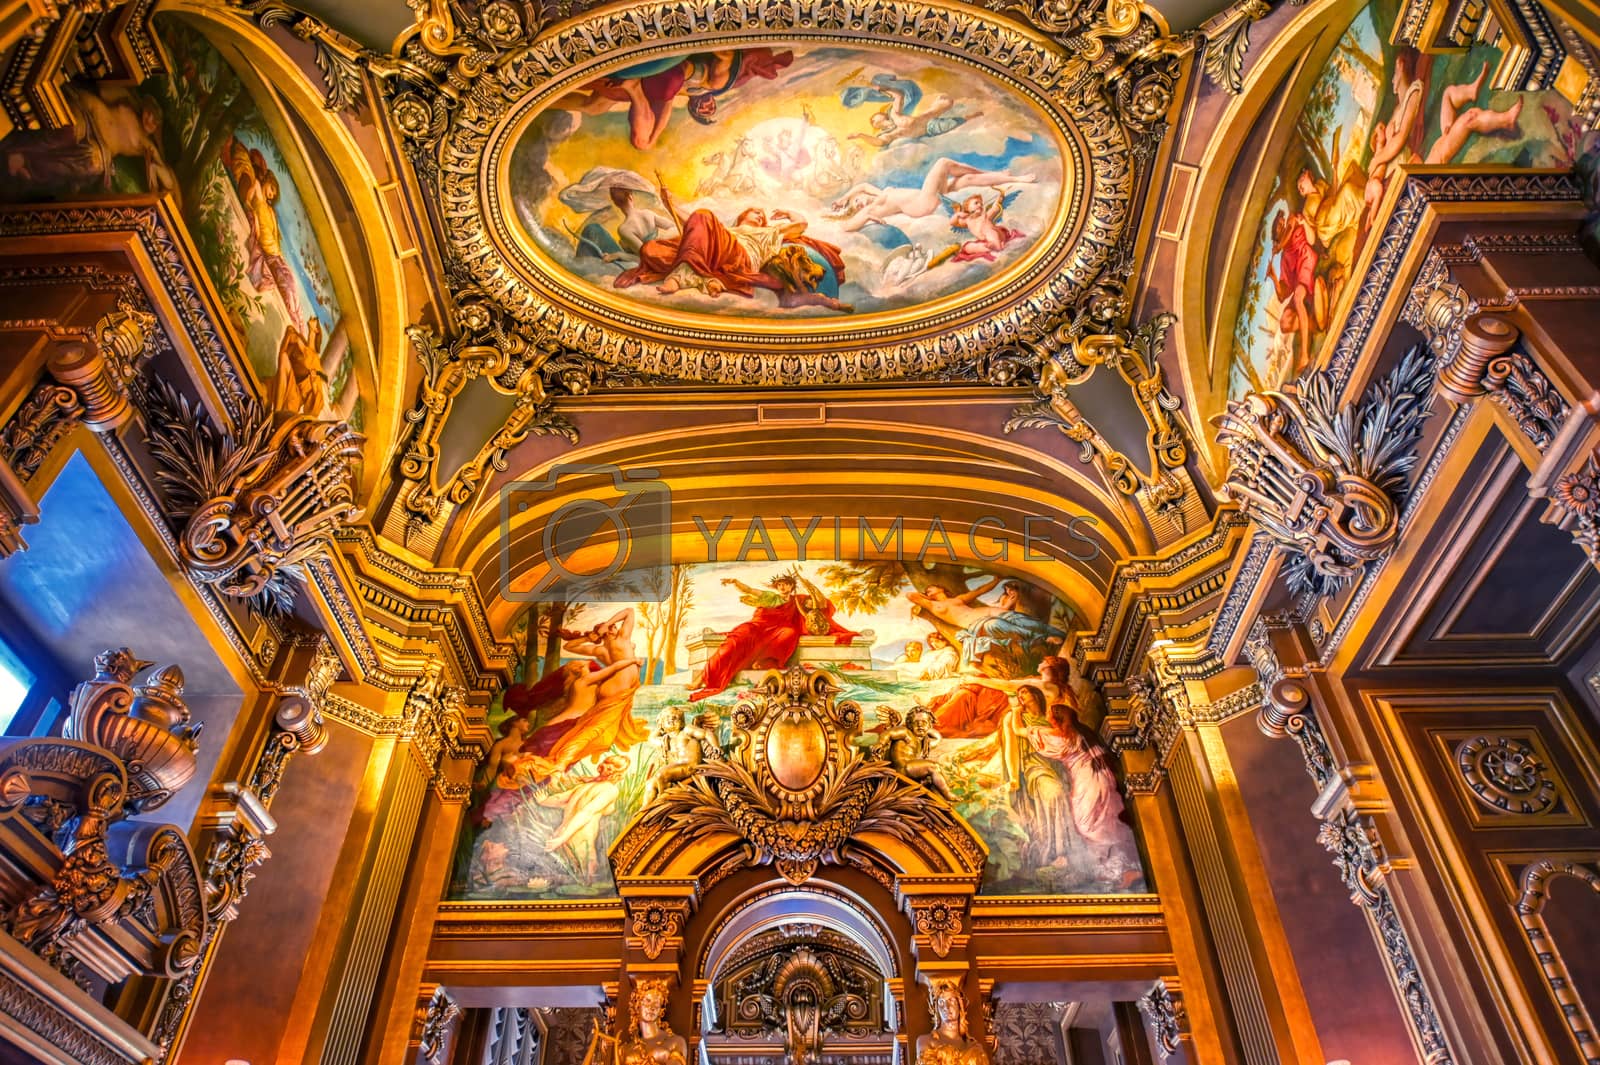 Royalty free image of Palais Garnier in Paris, France by jbyard22